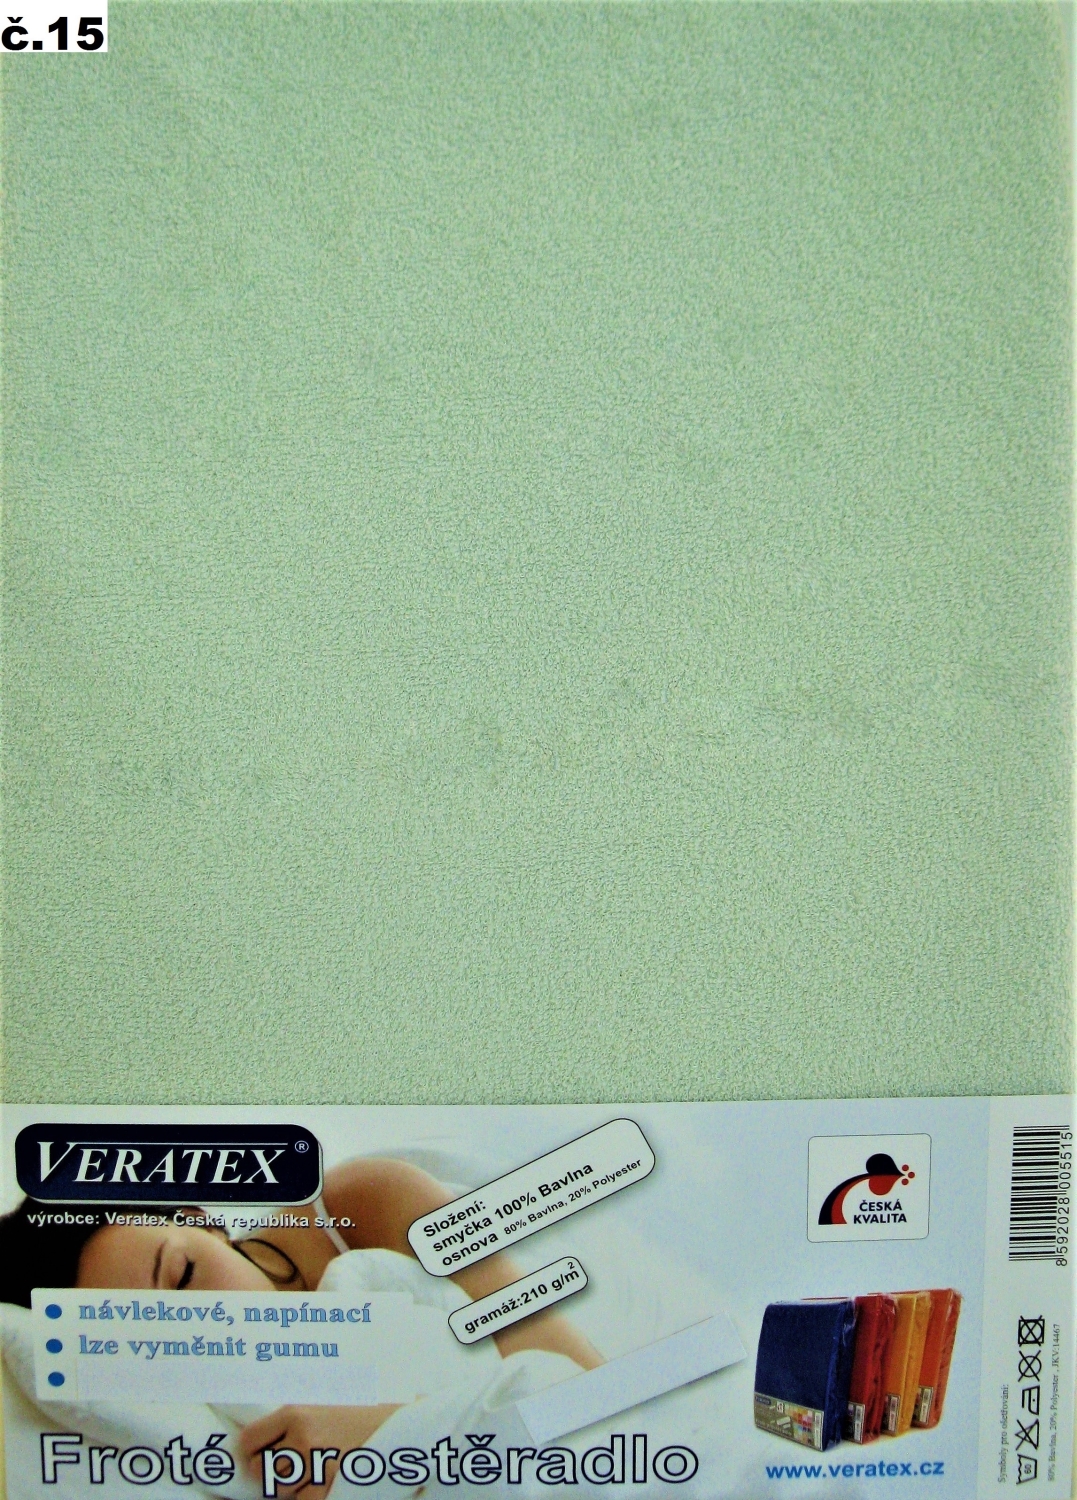 Veratex Froté prostěradlo 200x200/15 cm (č.15 sv.zelená) 200 x 200 cm